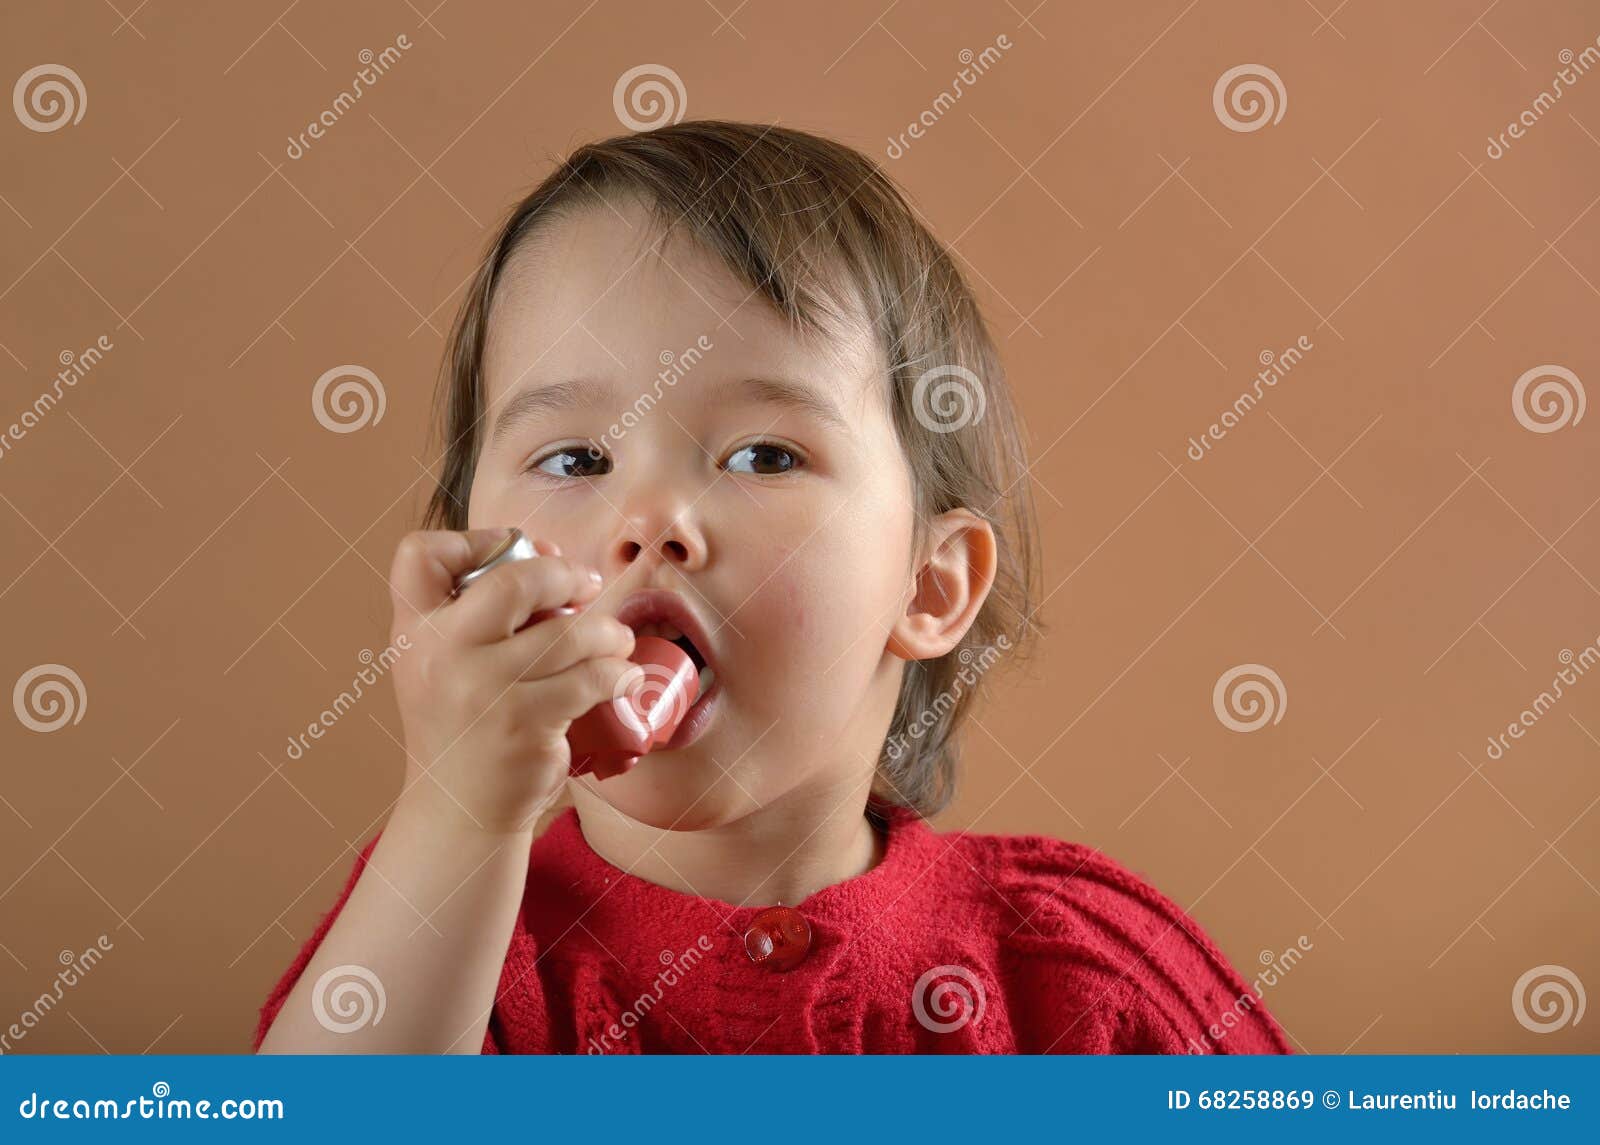 little girl breathing asthmatic medicine inhaler